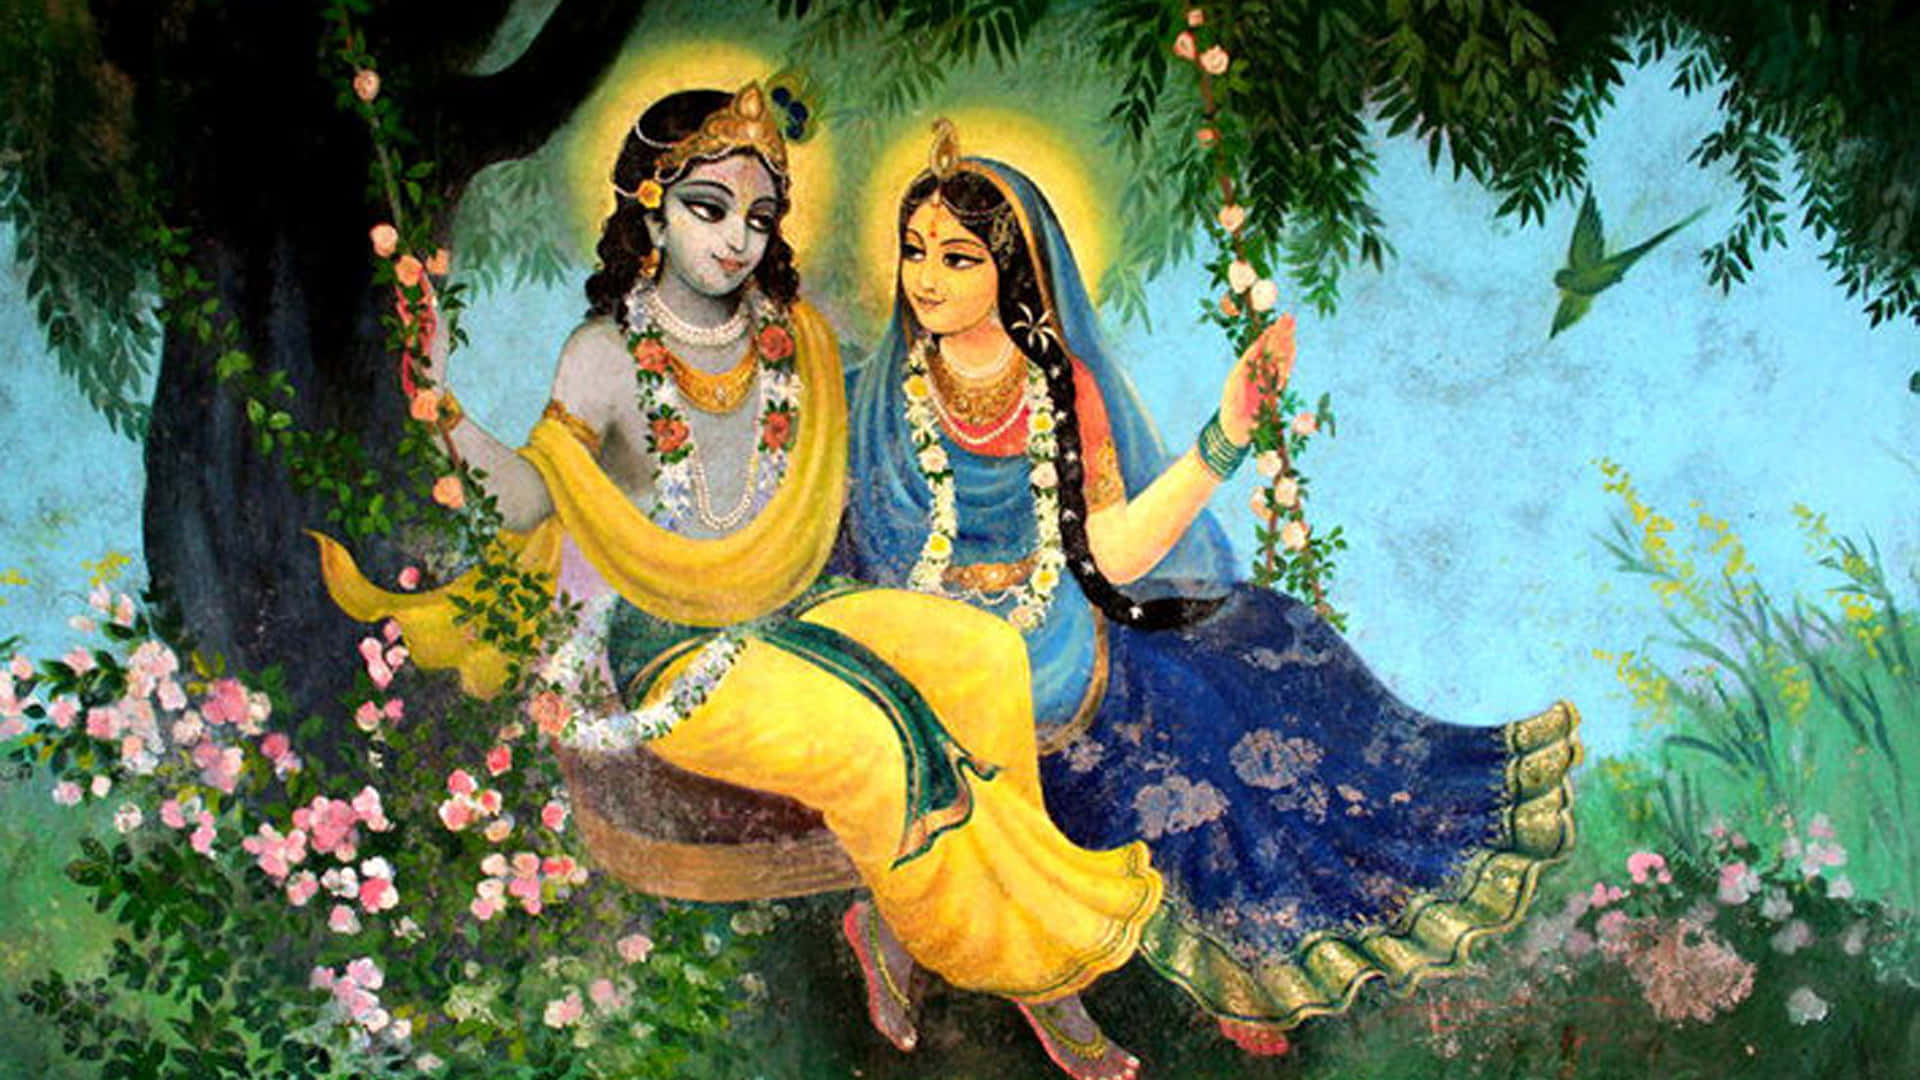 Imagende Radha Krishna En Un Columpio De Flores.